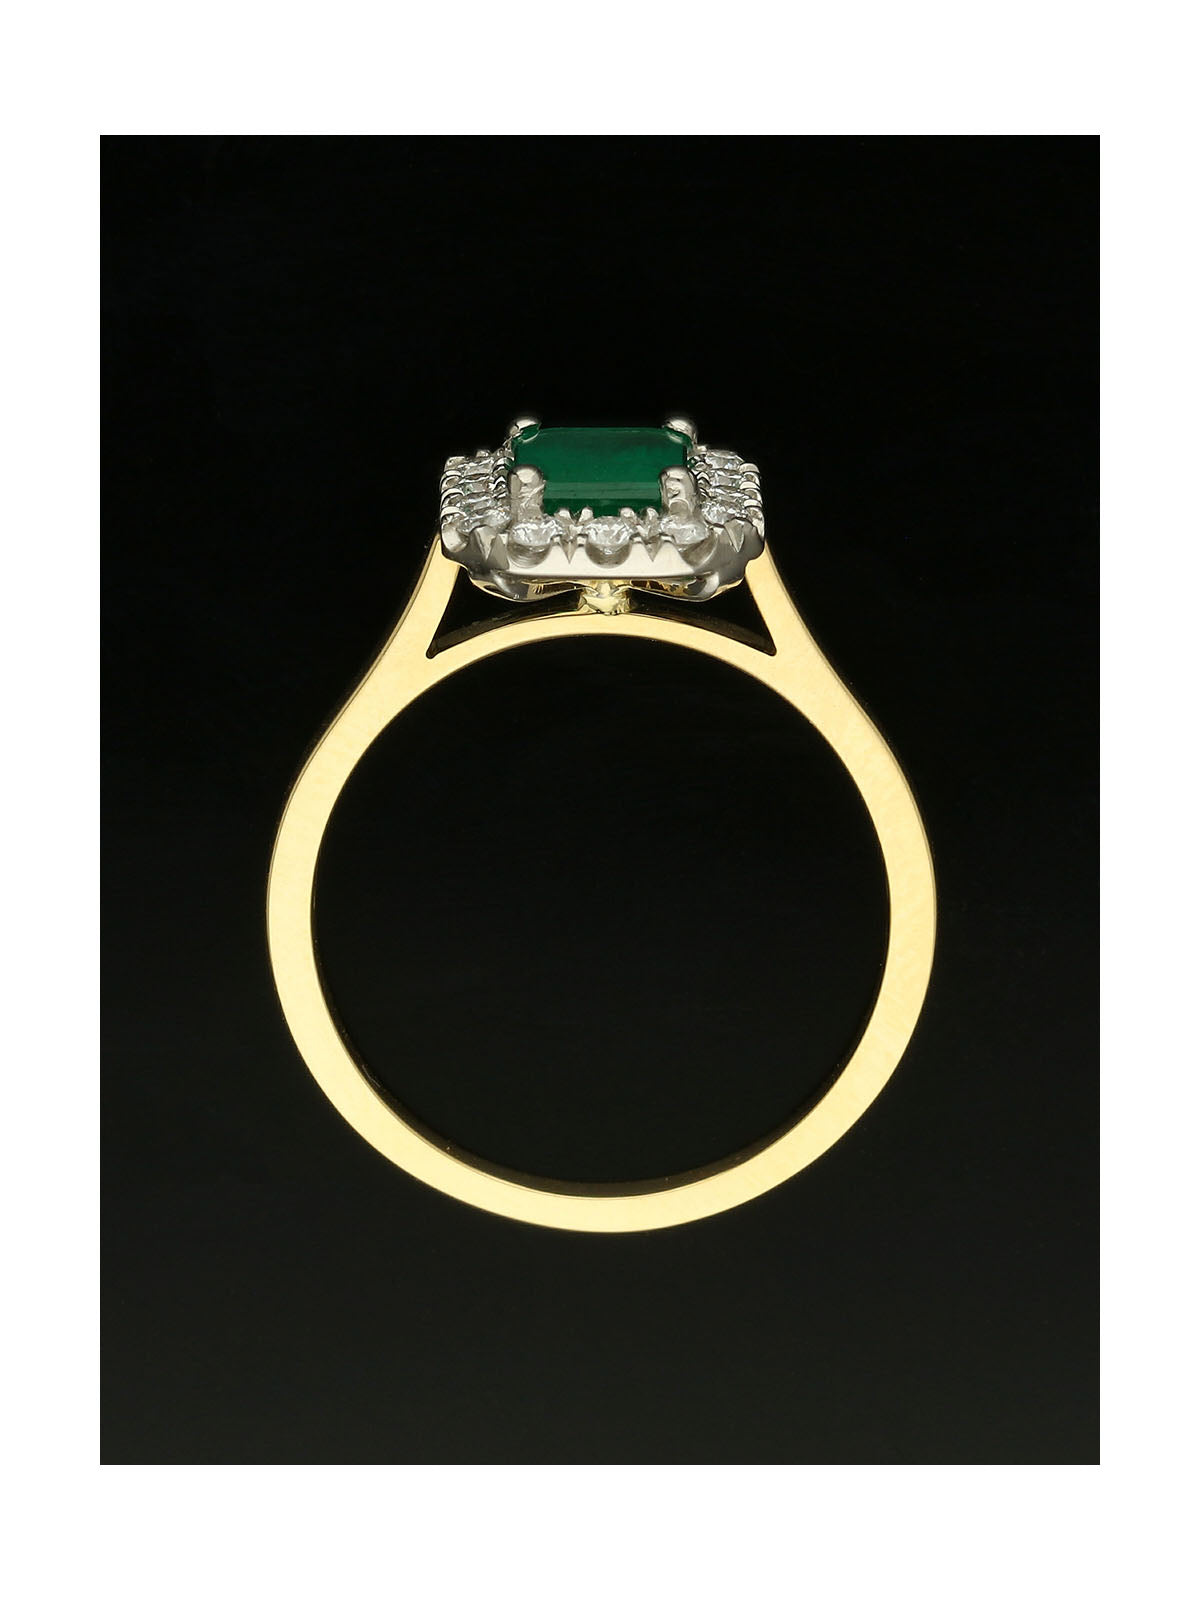 Emerald & Diamond Emerald Cut Halo Ring in 18ct Yellow & White Gold